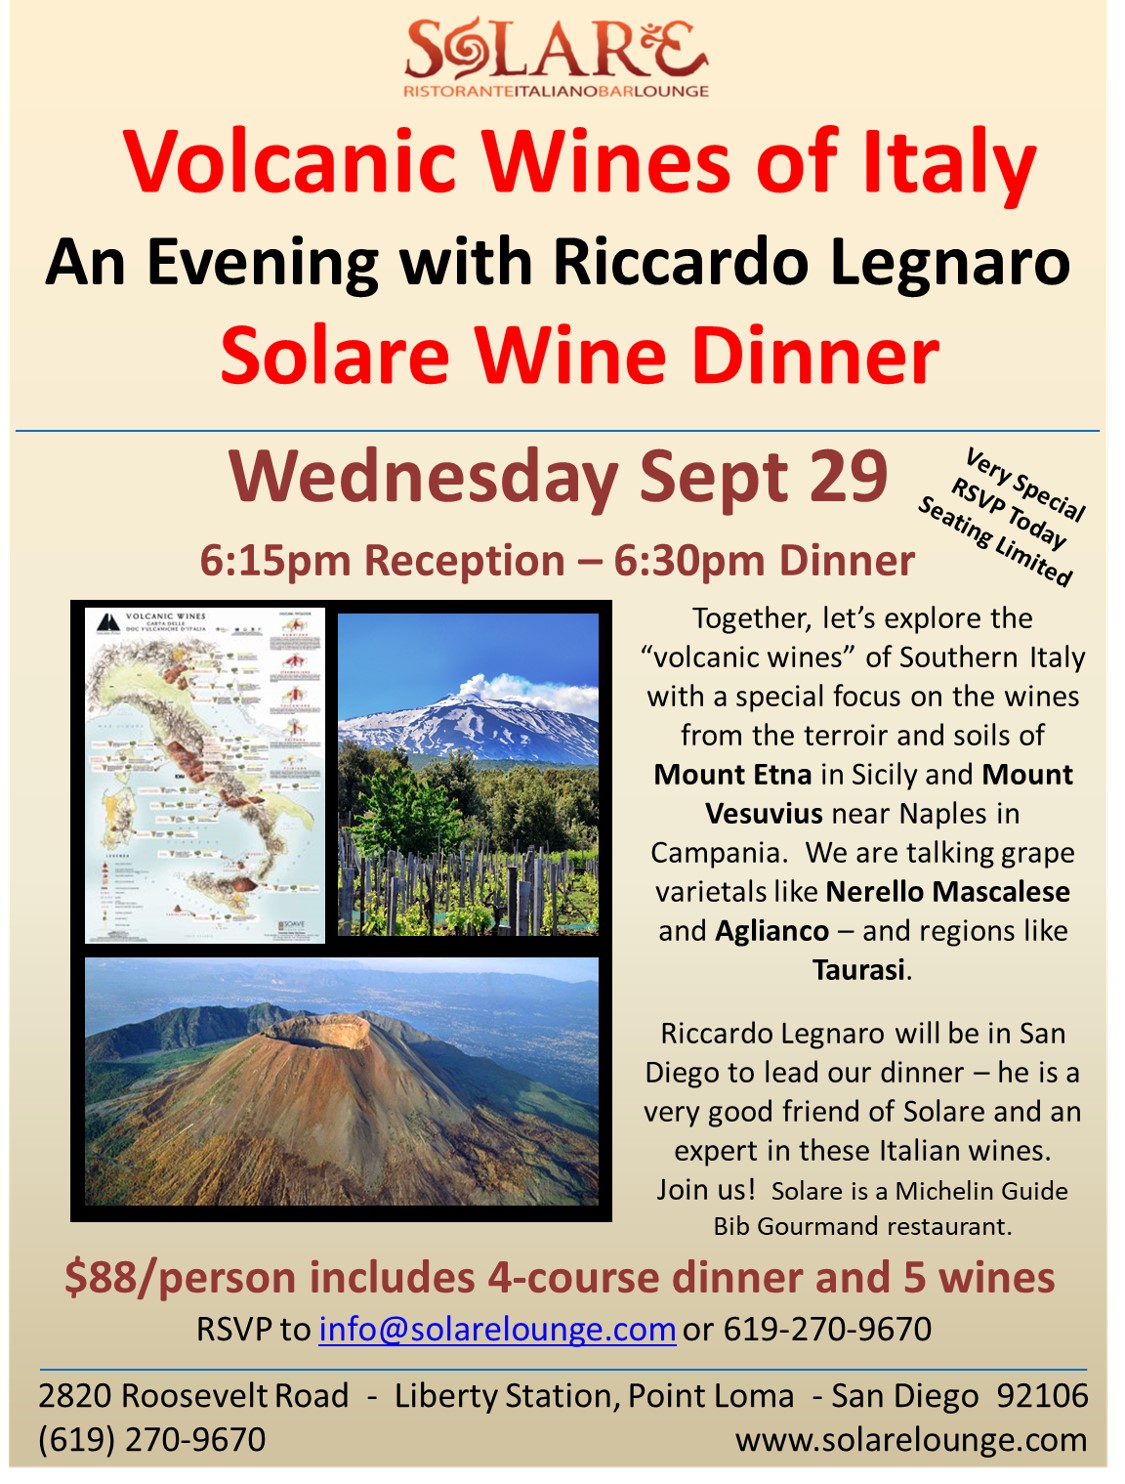 Solare Wine Dinner - Volcanic Wines of Italy!